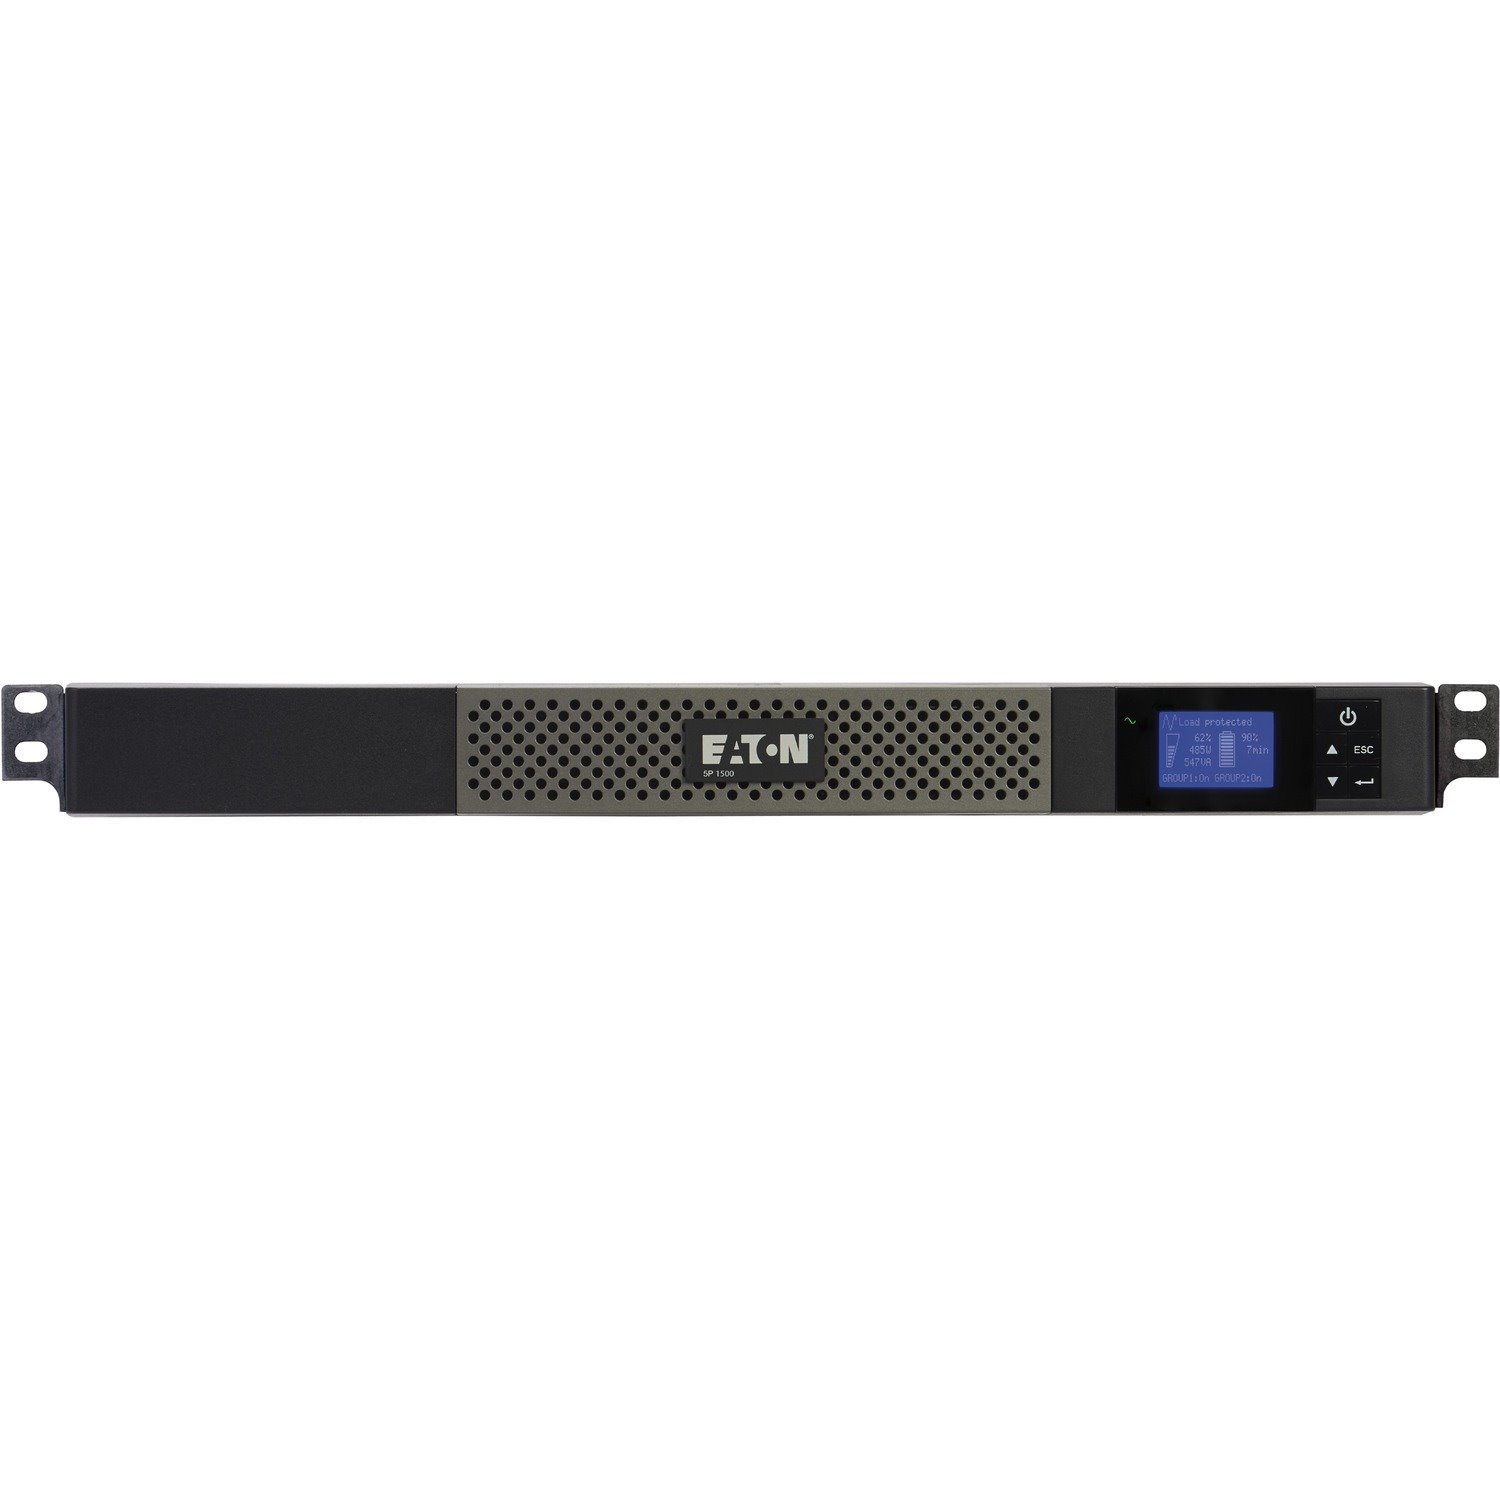 Eaton 5P 1440VA 1100W 120V Line-Interactive UPS, 5-15P, 5x 5-15R Outlets, True Sine Wave, Cybersecure Network Card Option, 1U - Battery Backup